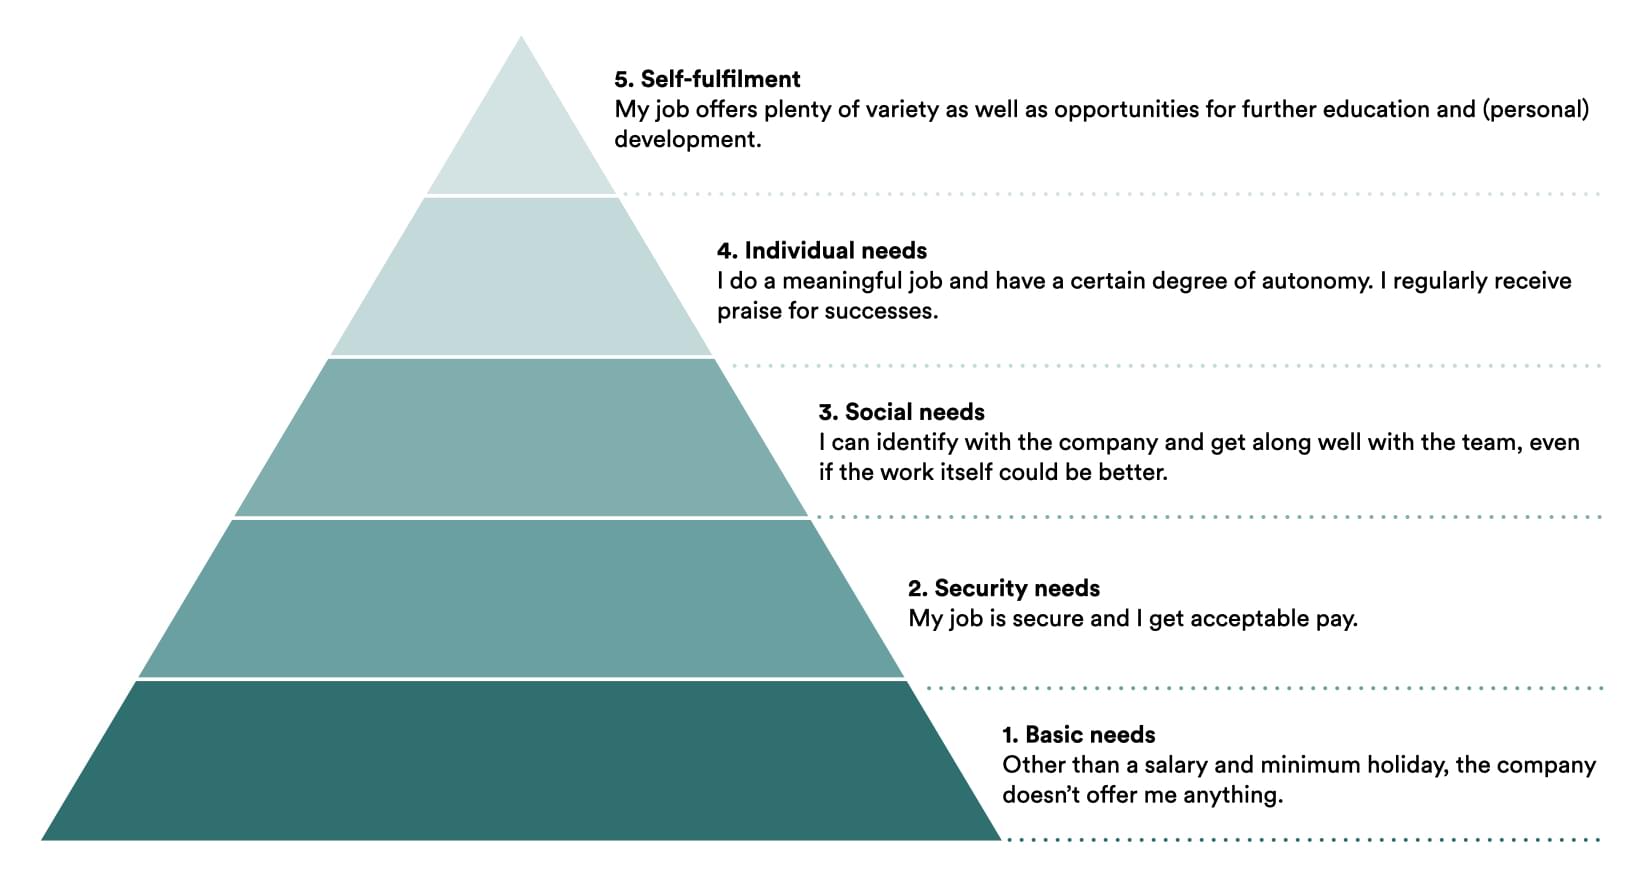 Needs pyramid according to Maslow